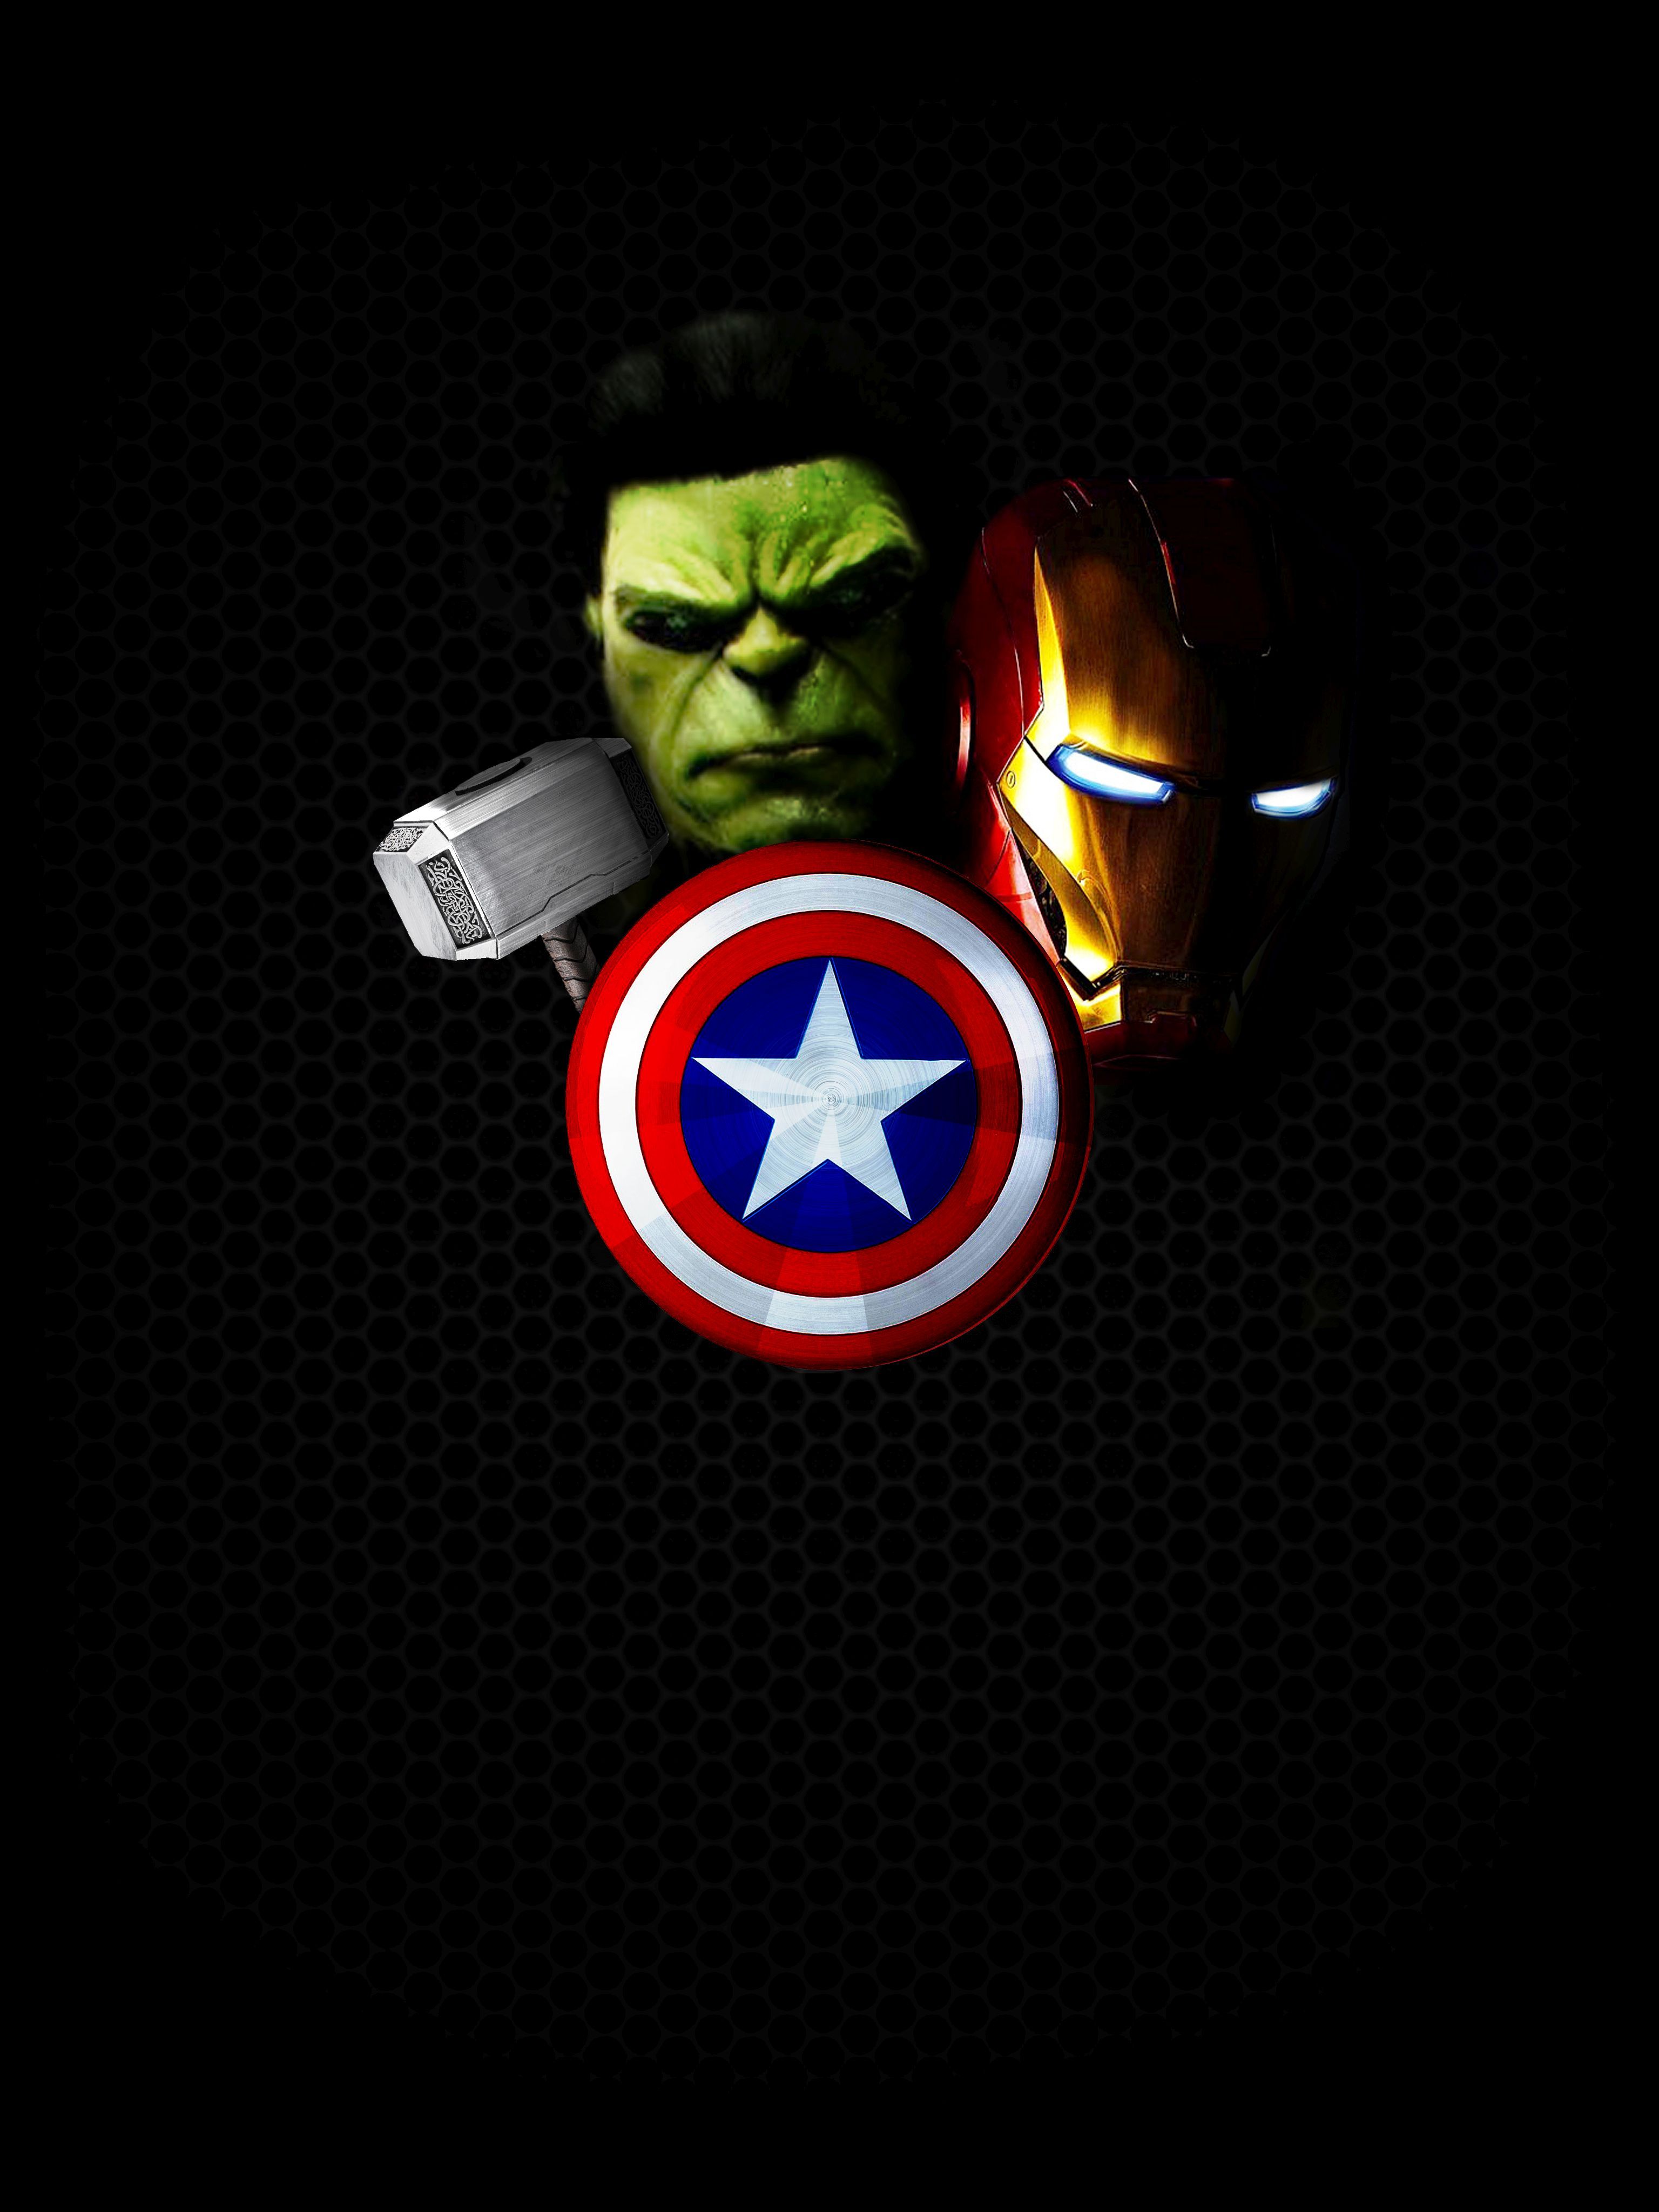 Avengers Captain America Iron Man Marvel 4K HD Avengers Wallpapers  HD  Wallpapers  ID 69122